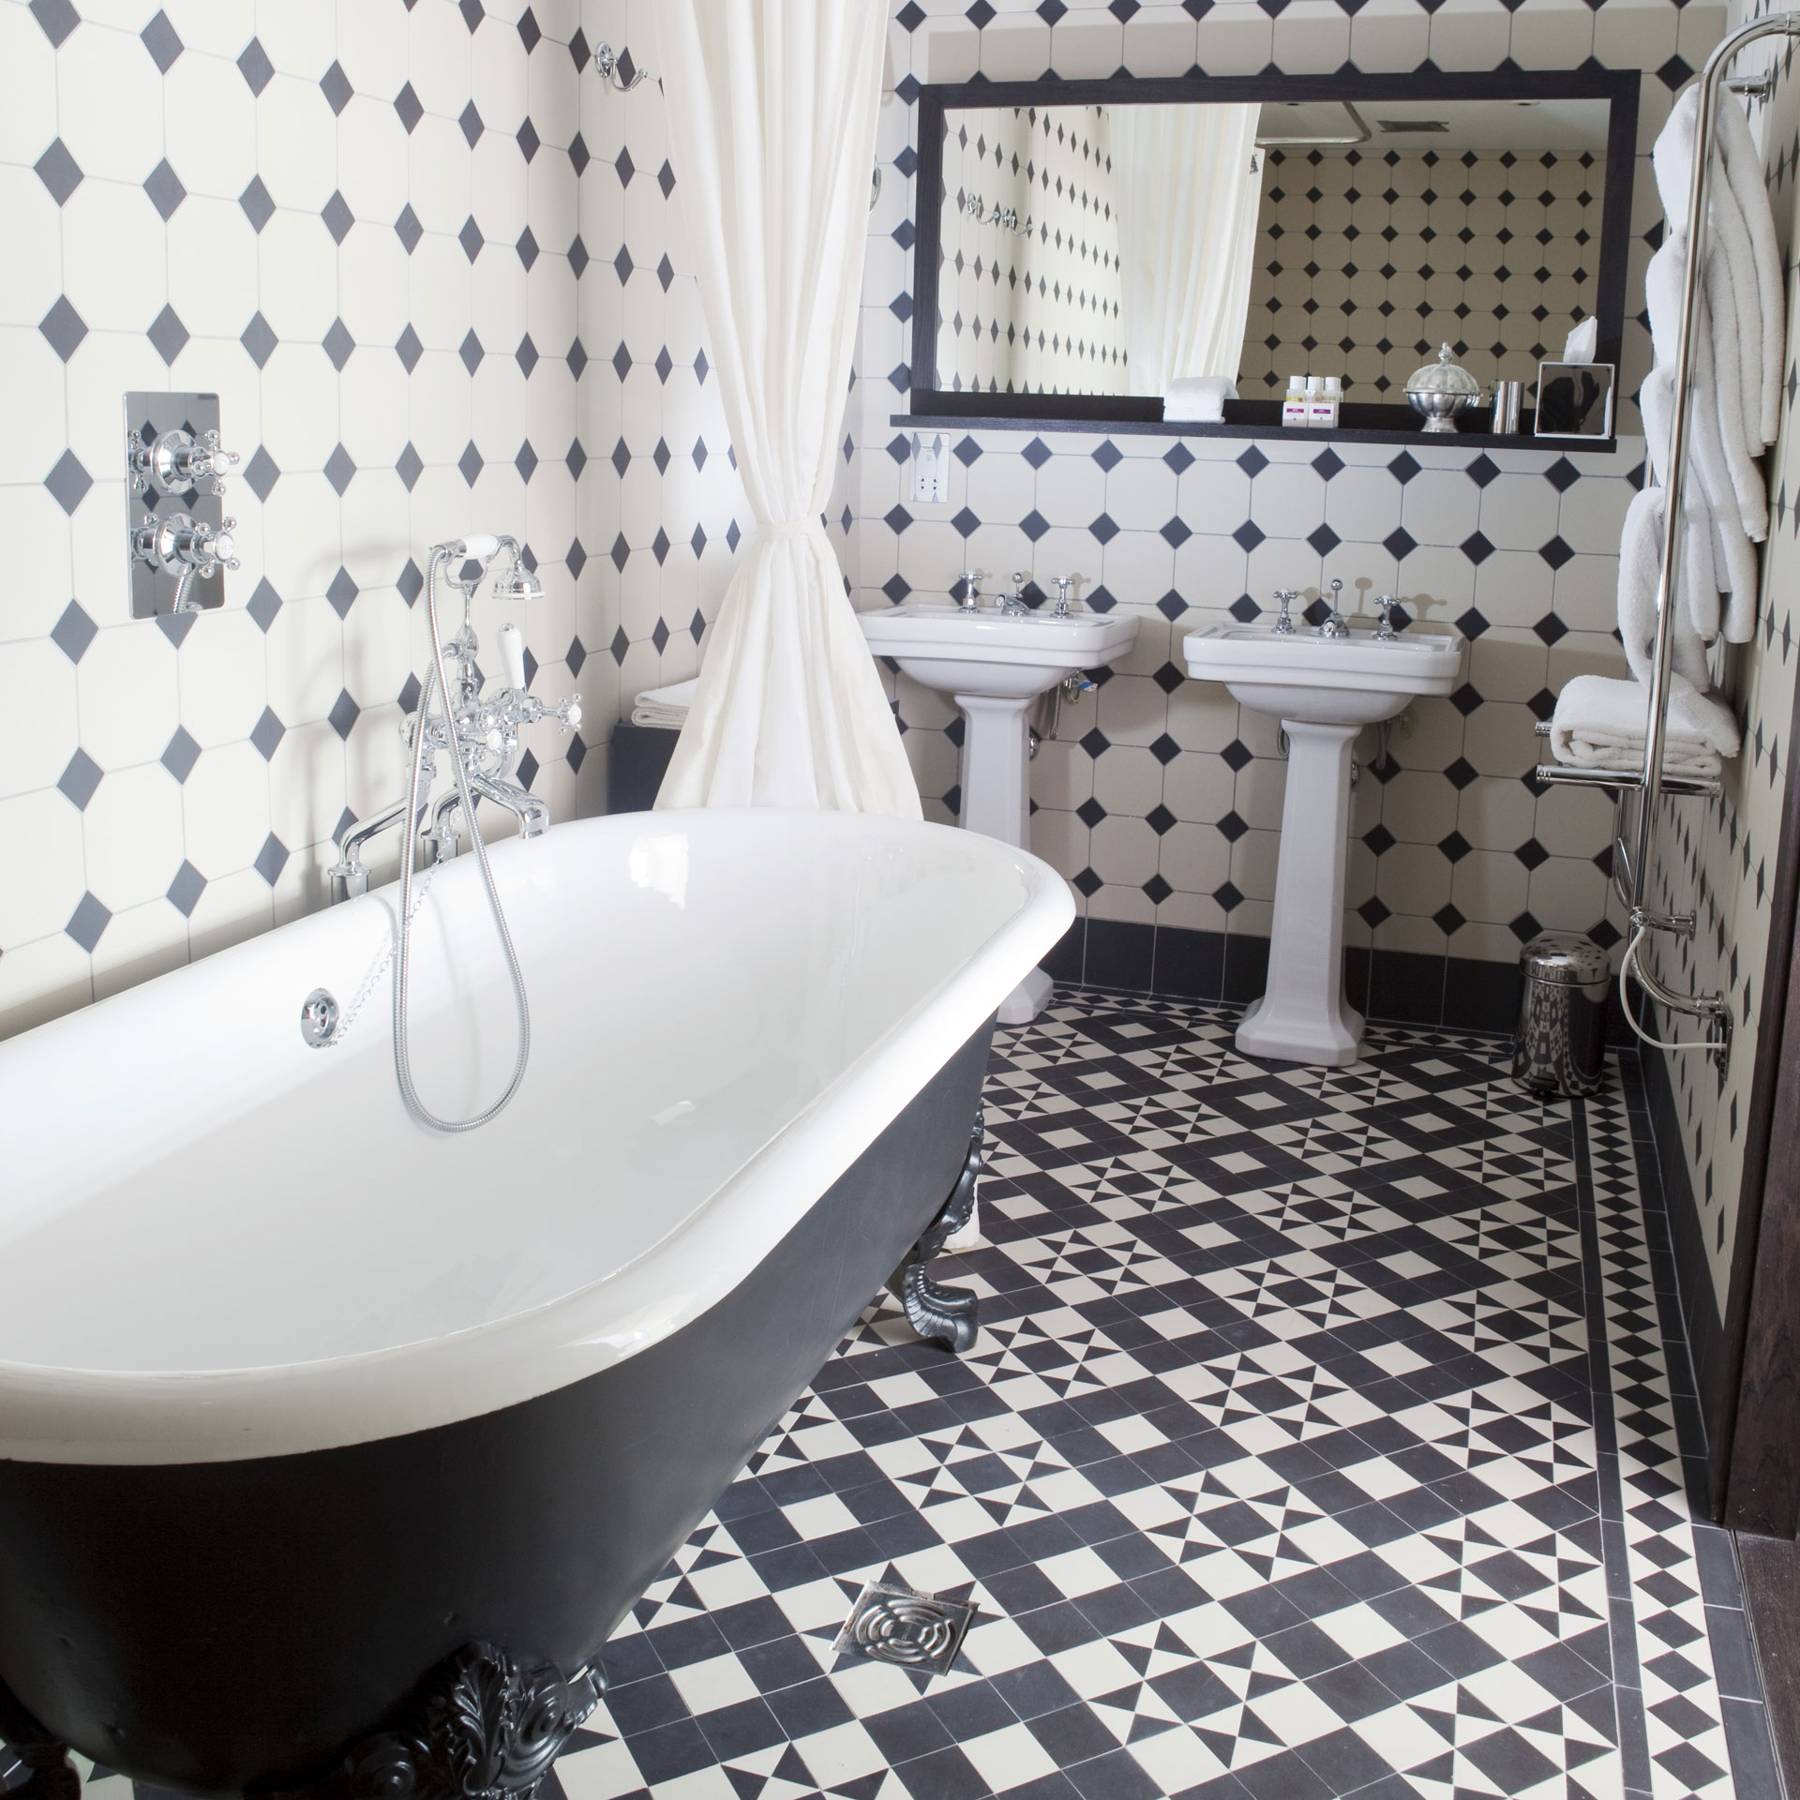 Victorian Ceramic Bathroom Tiles Bathroom Design Ideas Images House Garden